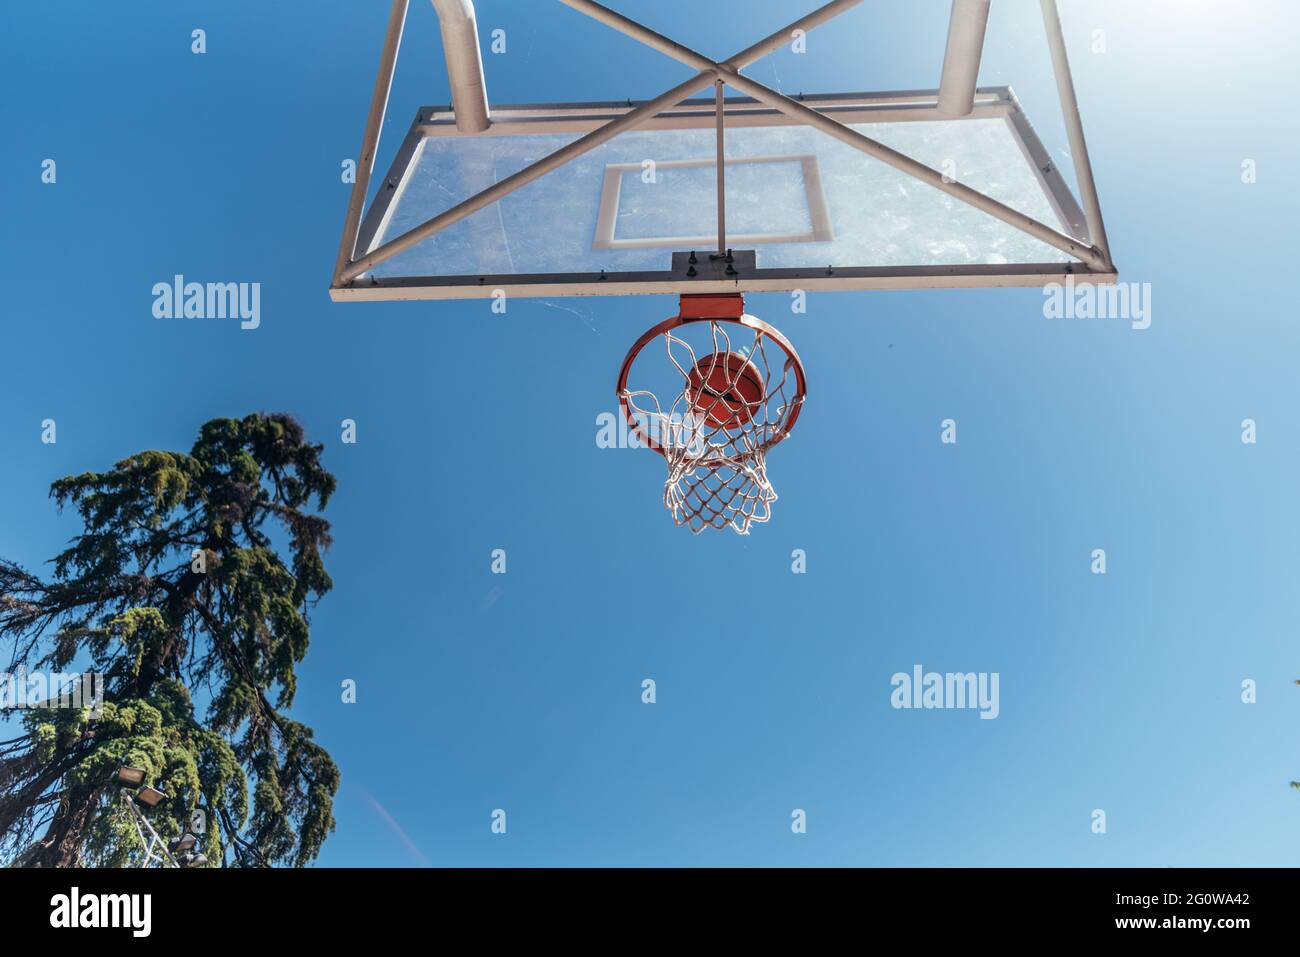 Bottom view of a basketball basket. Ball entering through the hoop. Stock Photo